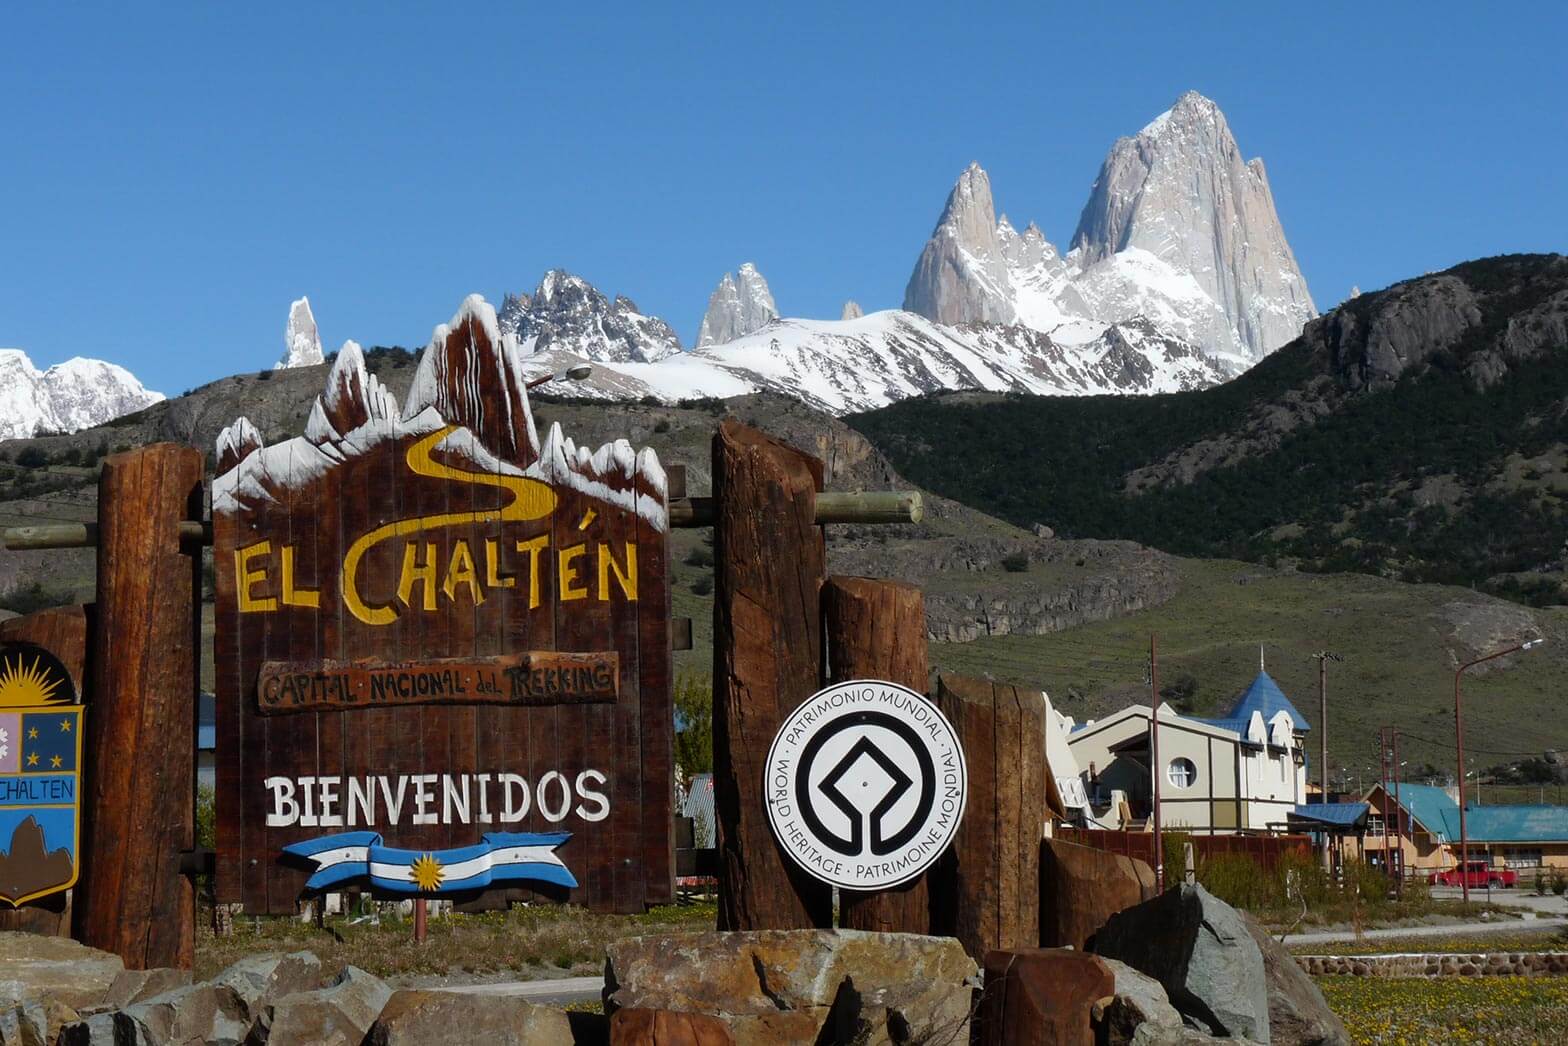 El Chalten, Argentina